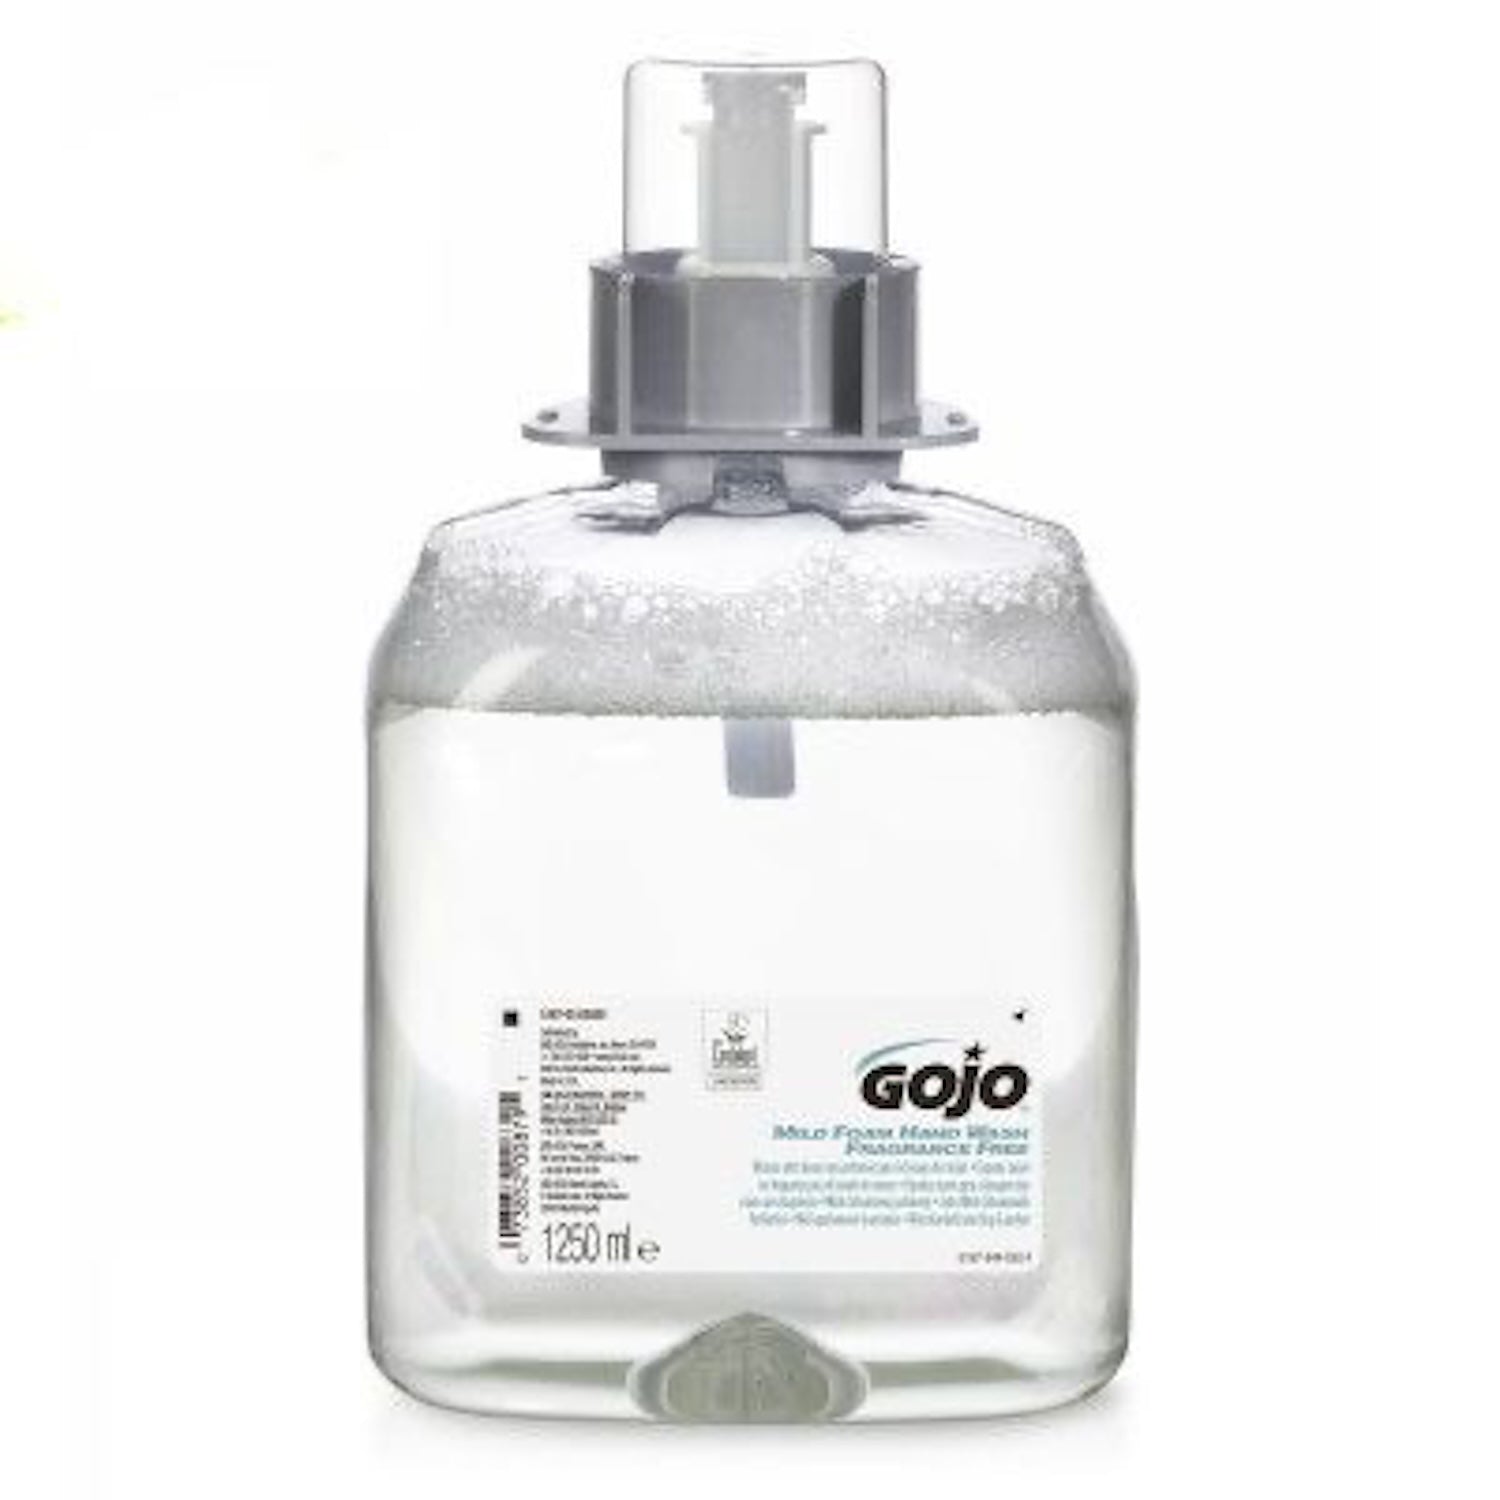 GOJO Mild Foam Hand Wash | Fragrance Free | 1250ml | Pack of 3